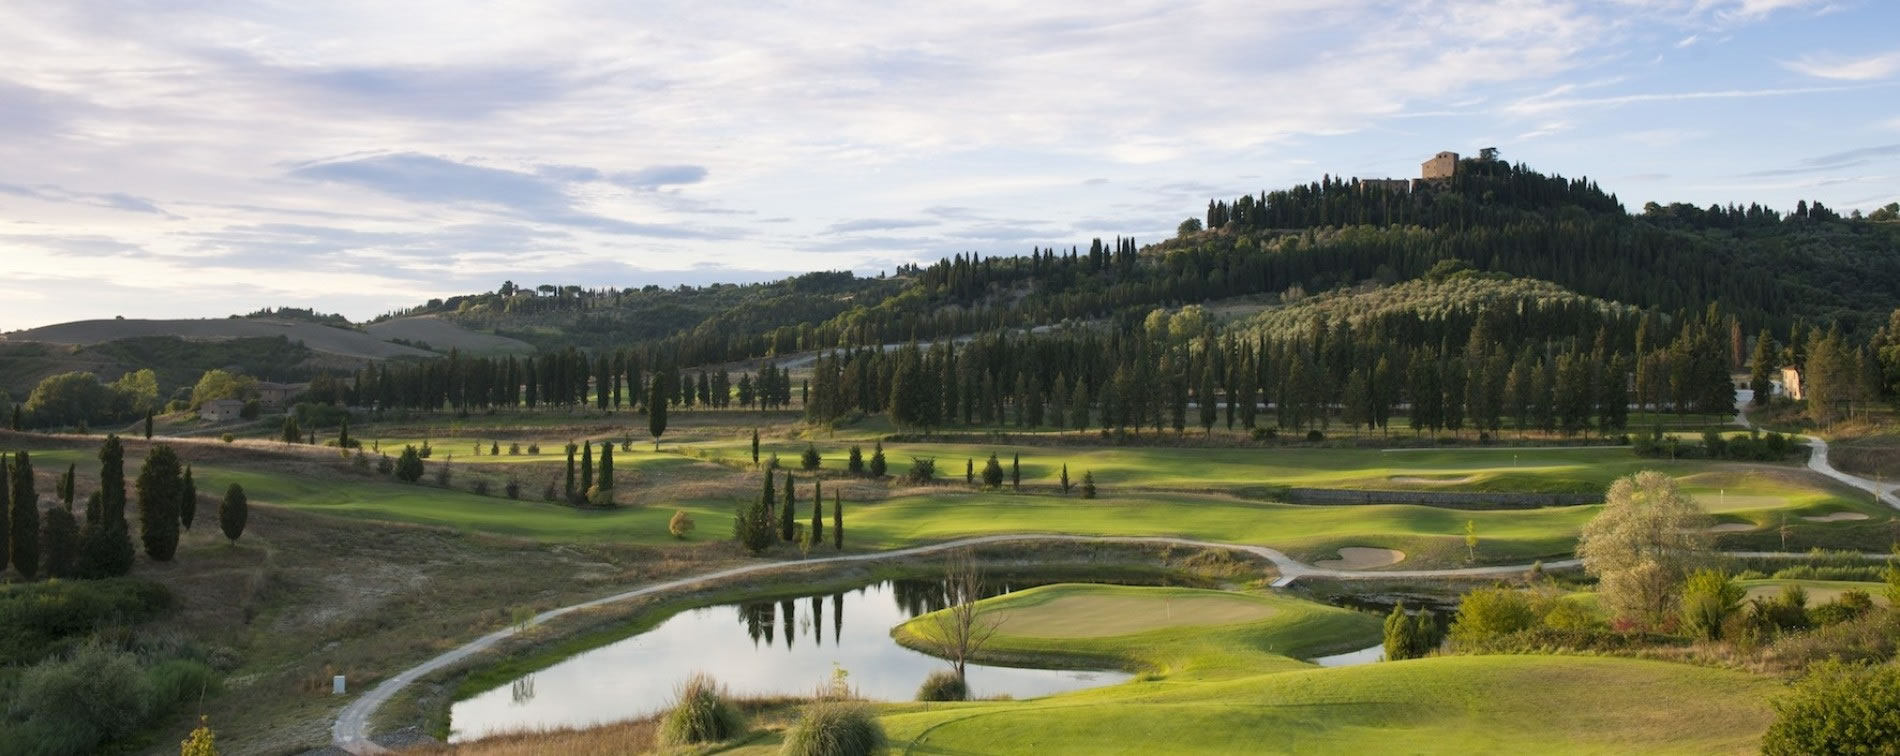 Villa Golf Toscana